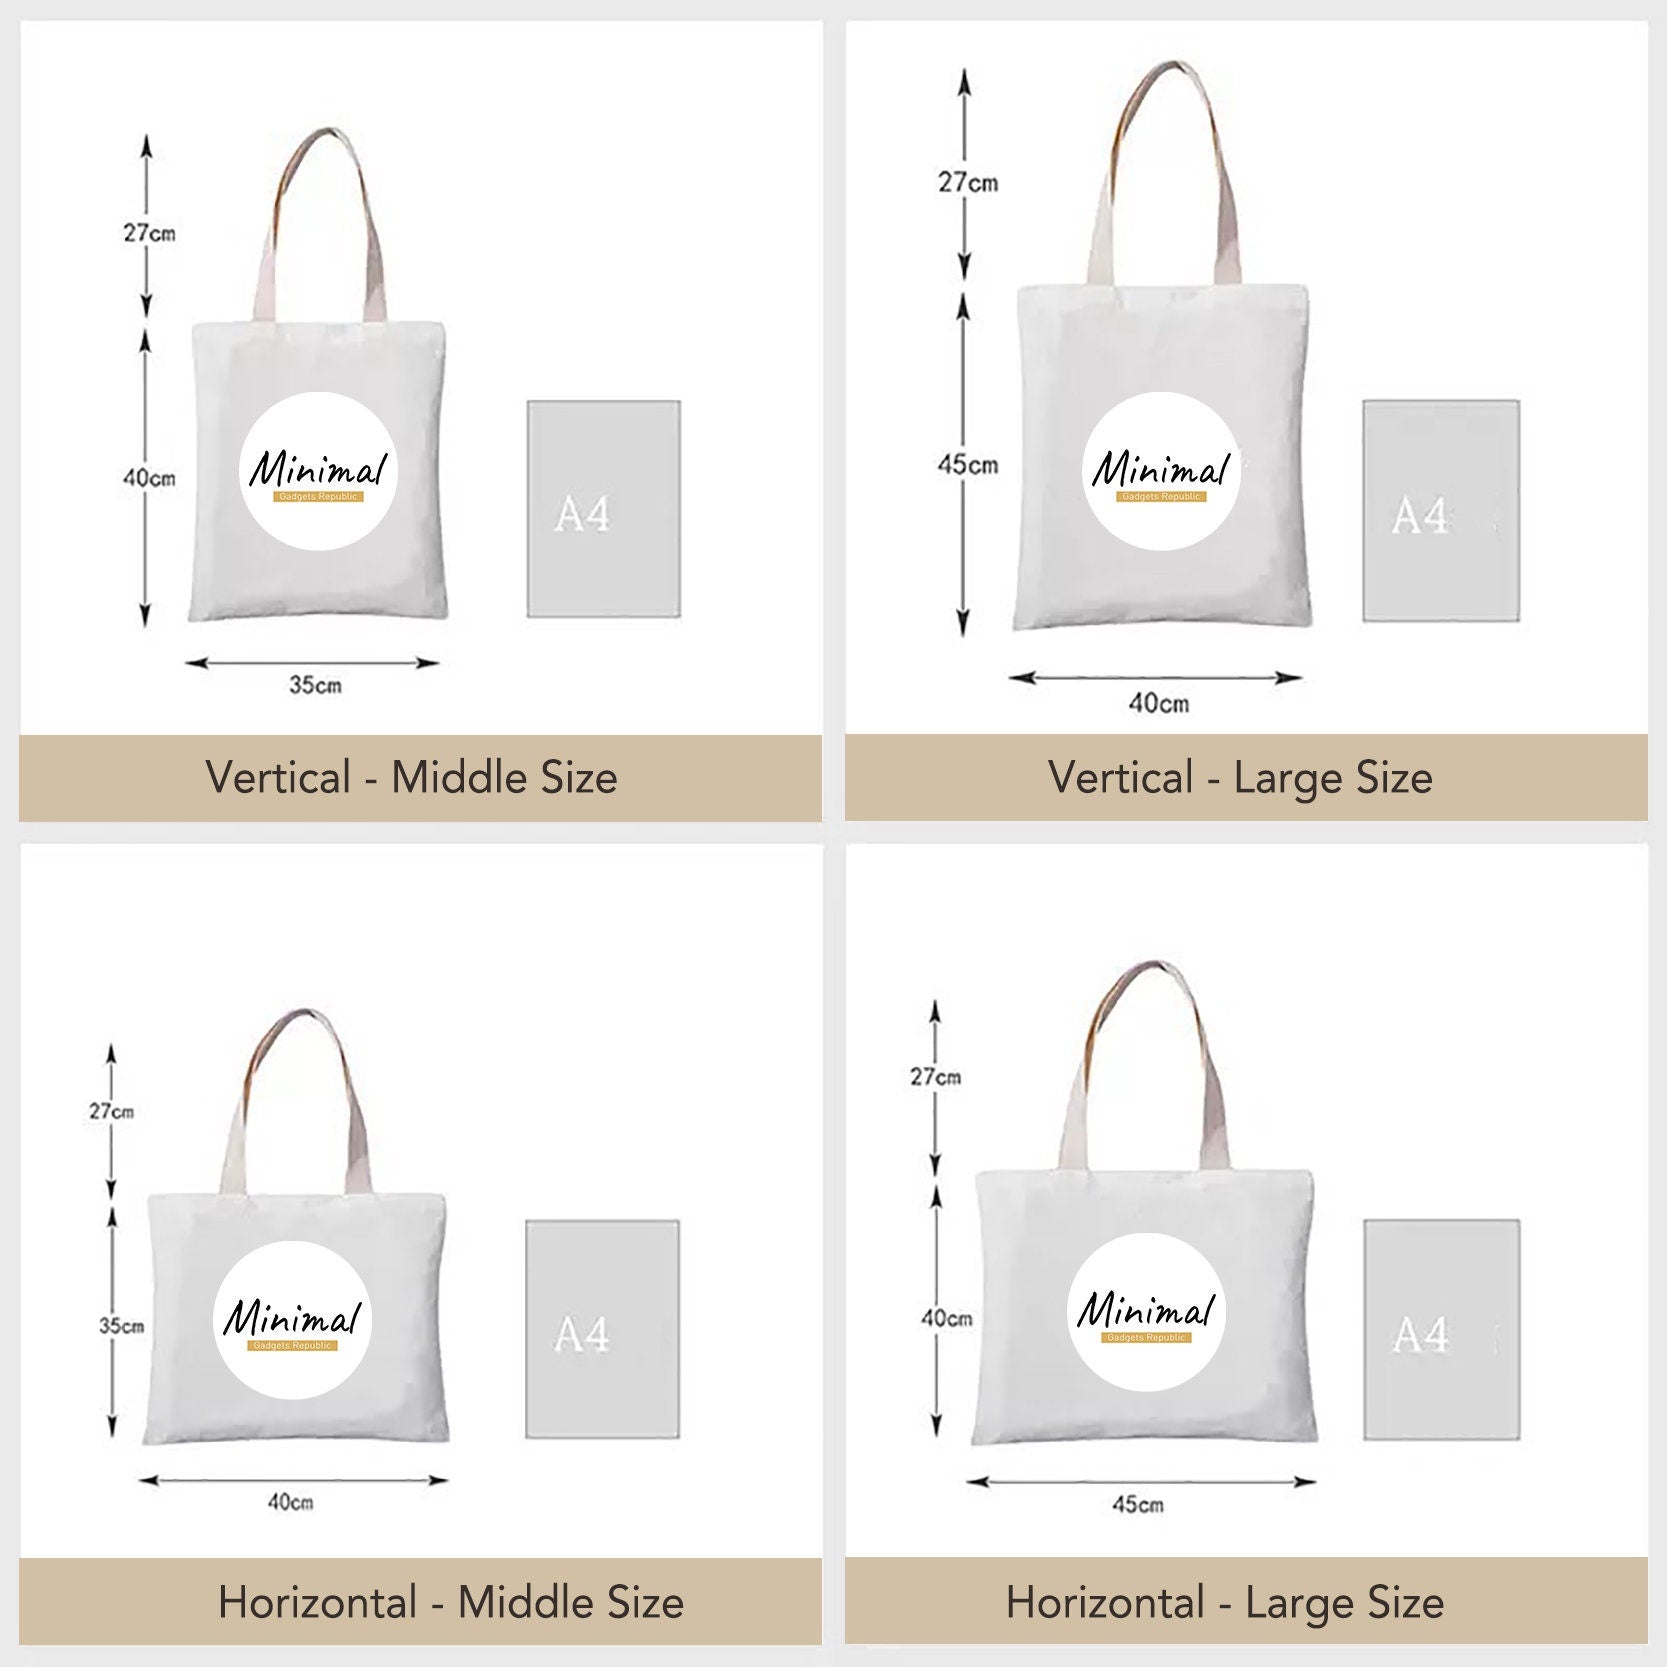 VistaPrint® Cotton Tote Bag